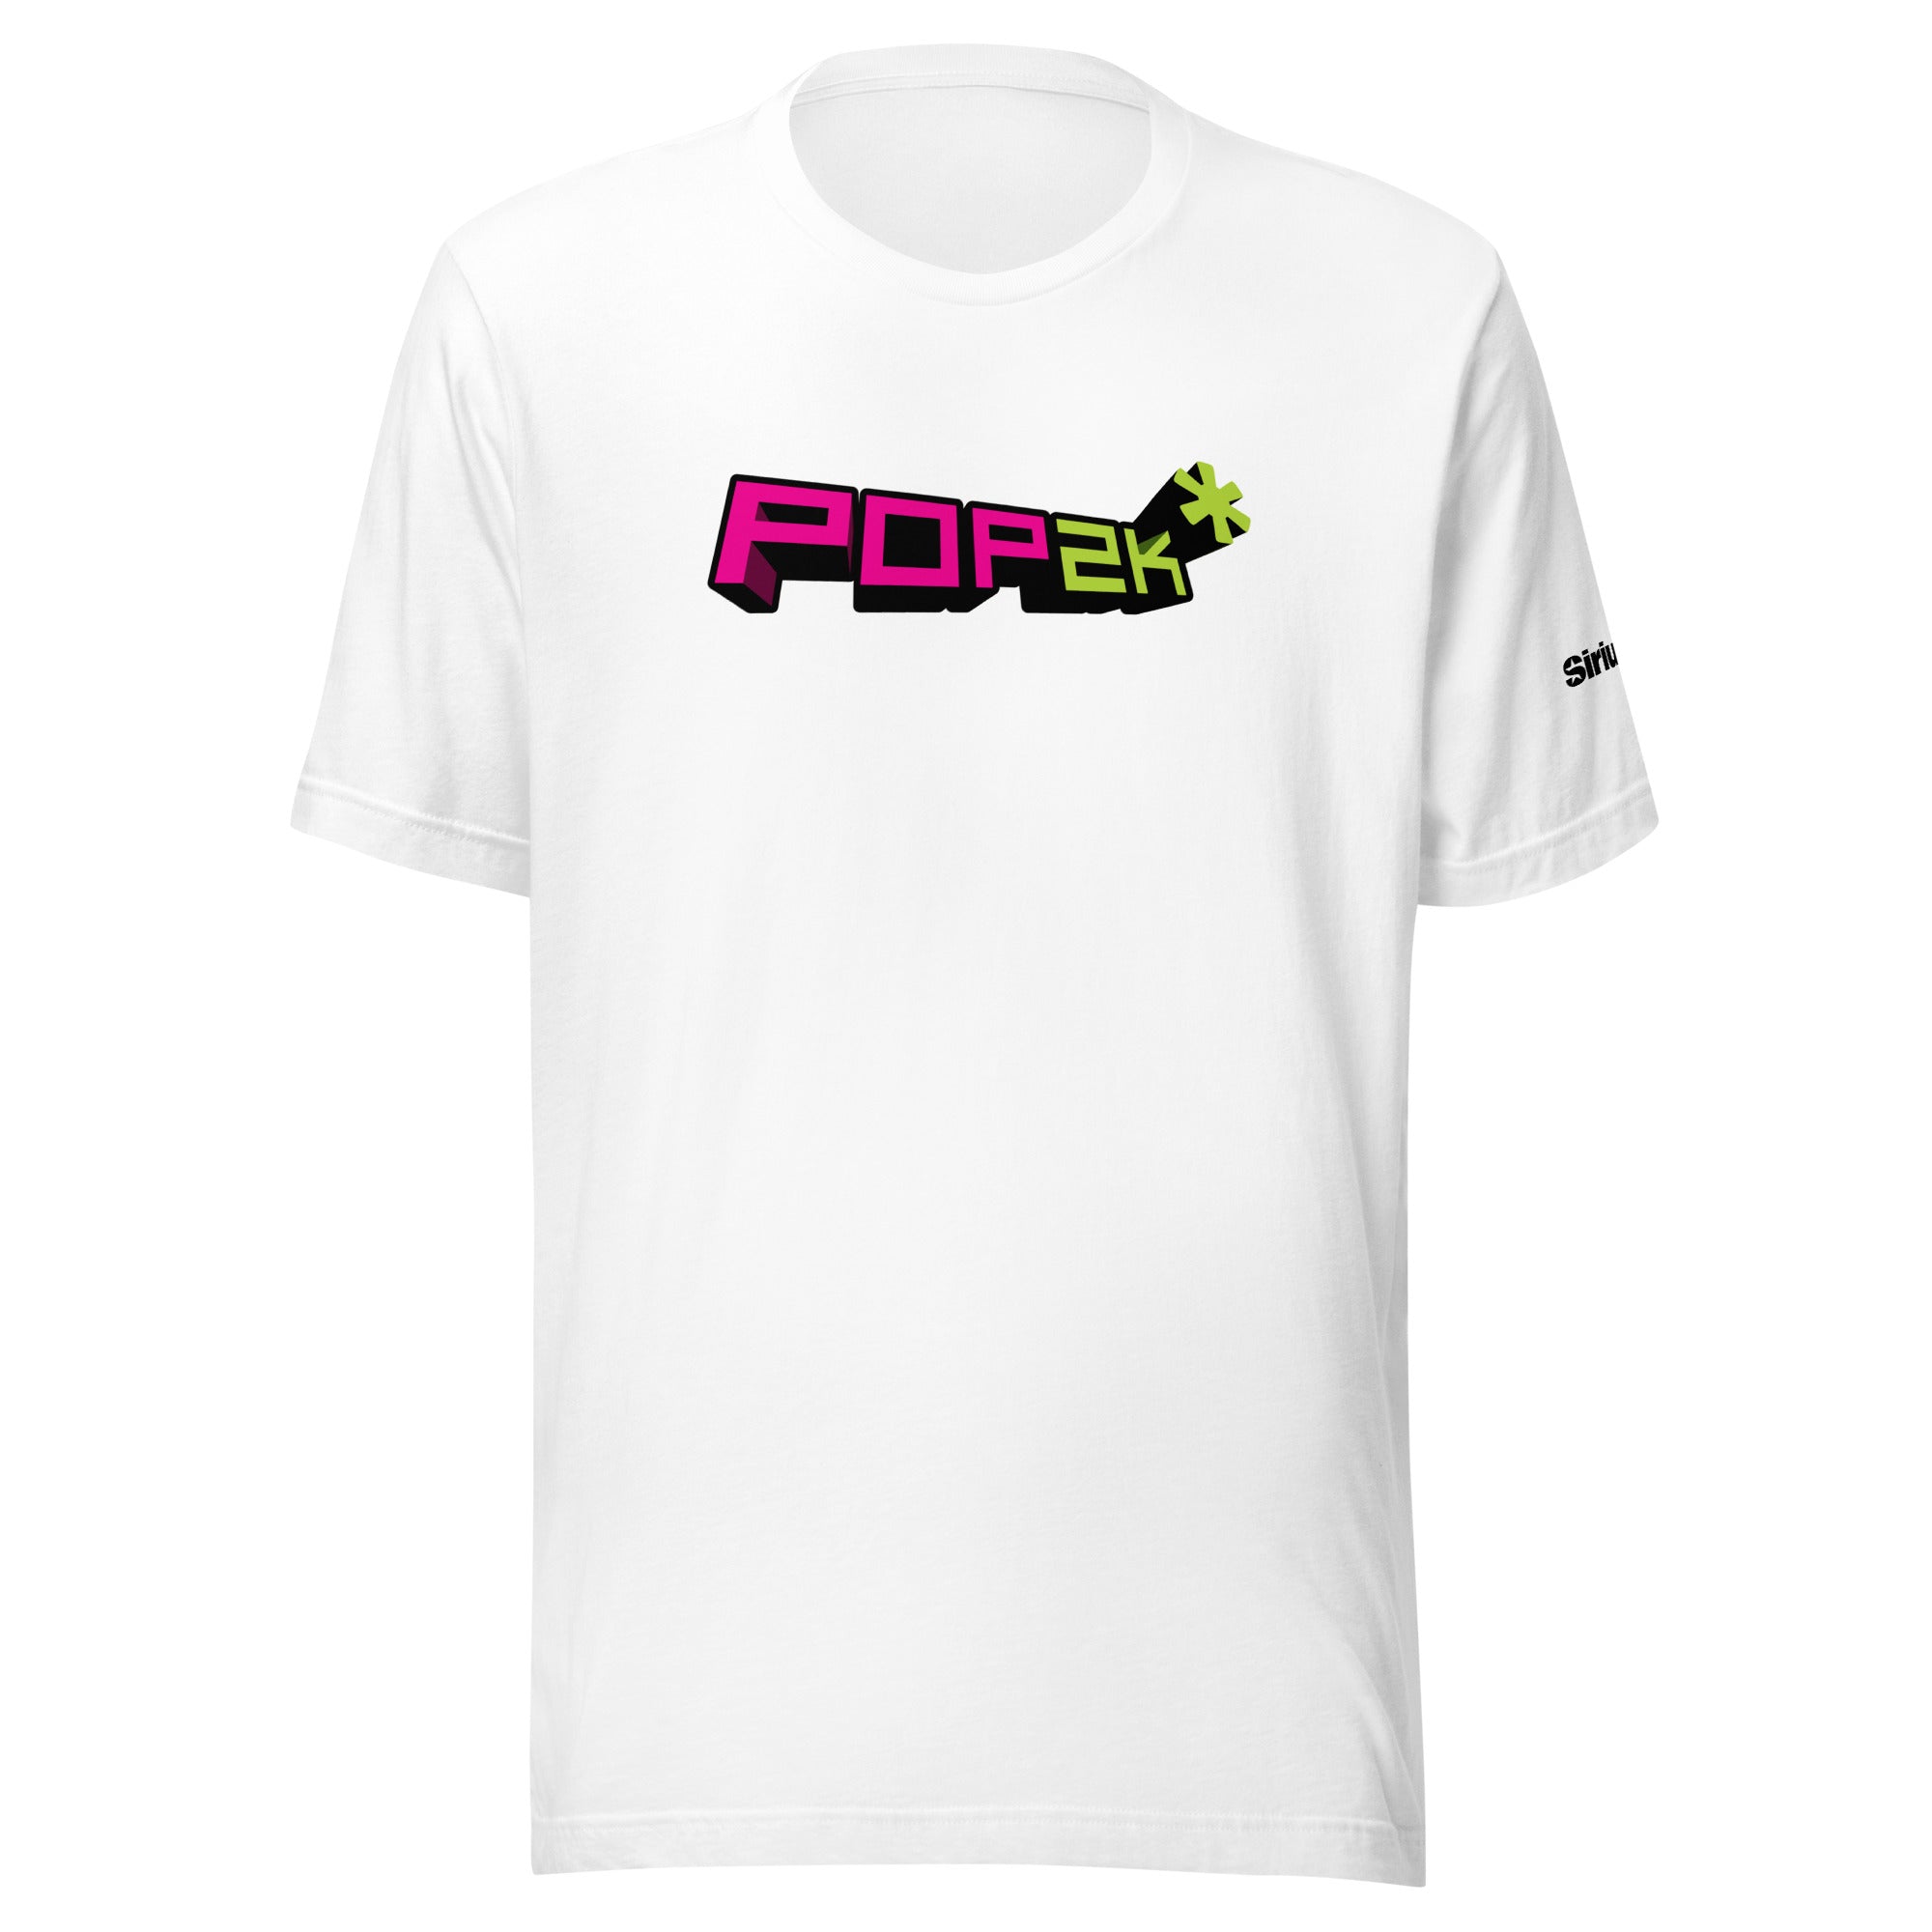 Pop 2k: T-shirt (White)